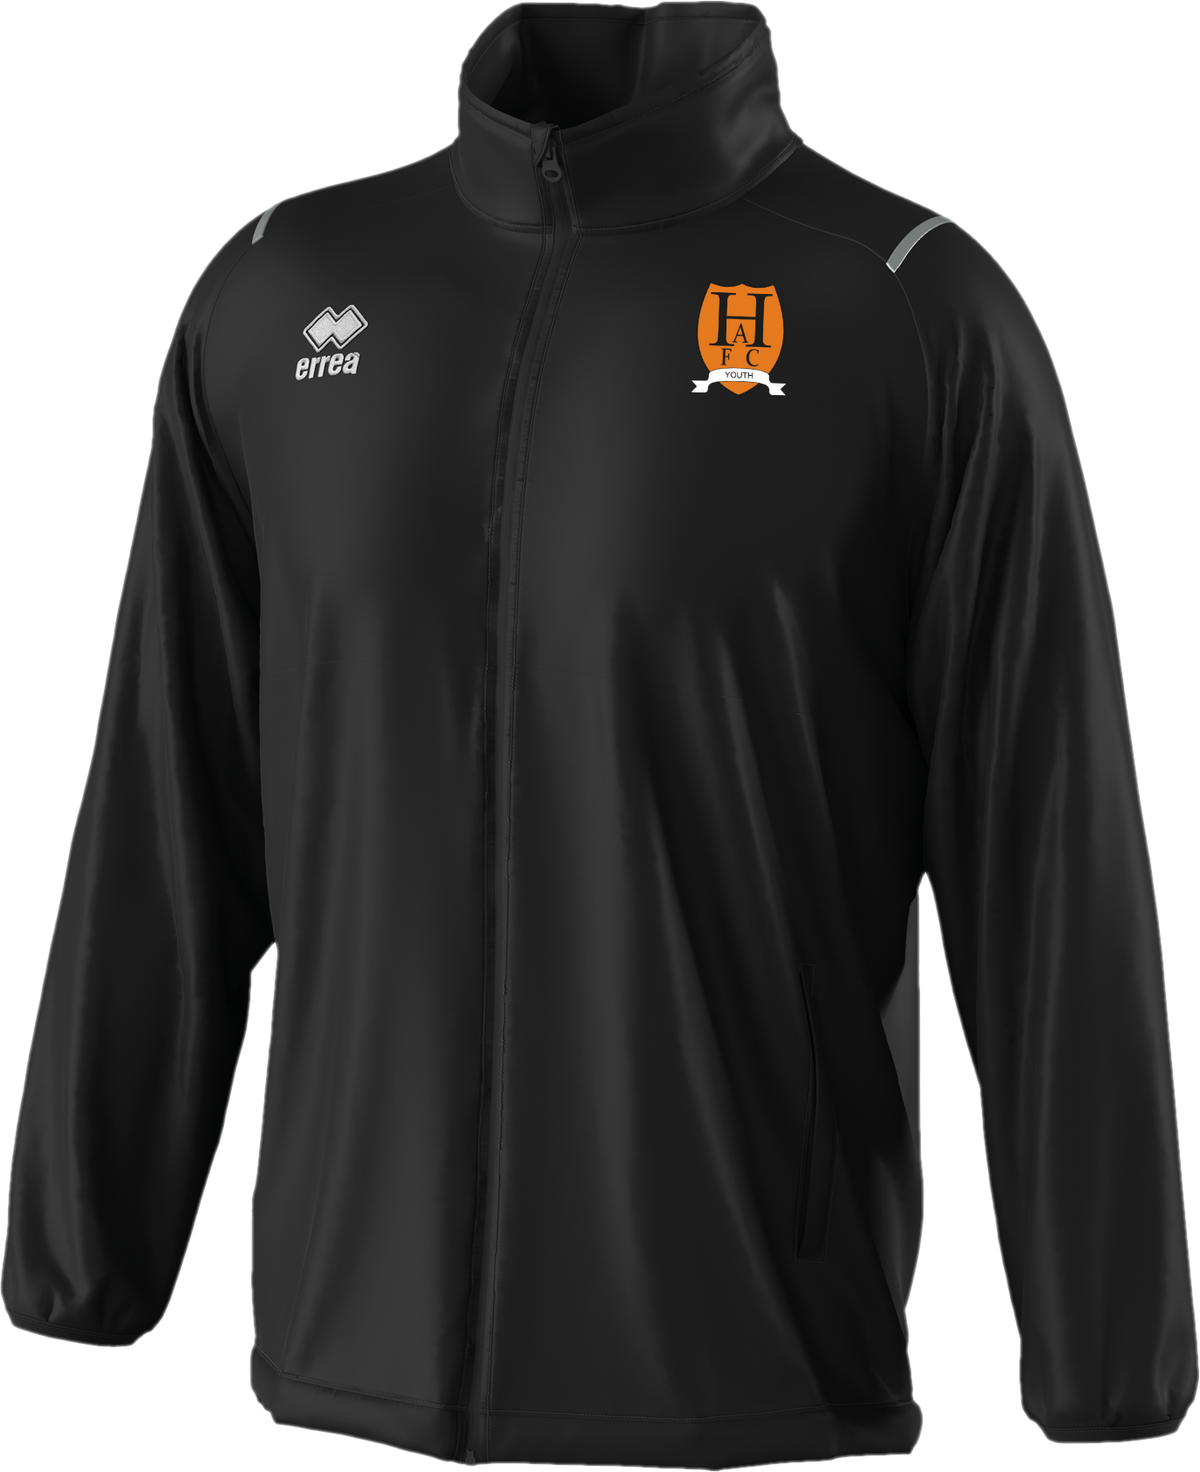 Hethersett Athletic FC Pressing Jacket in Adult